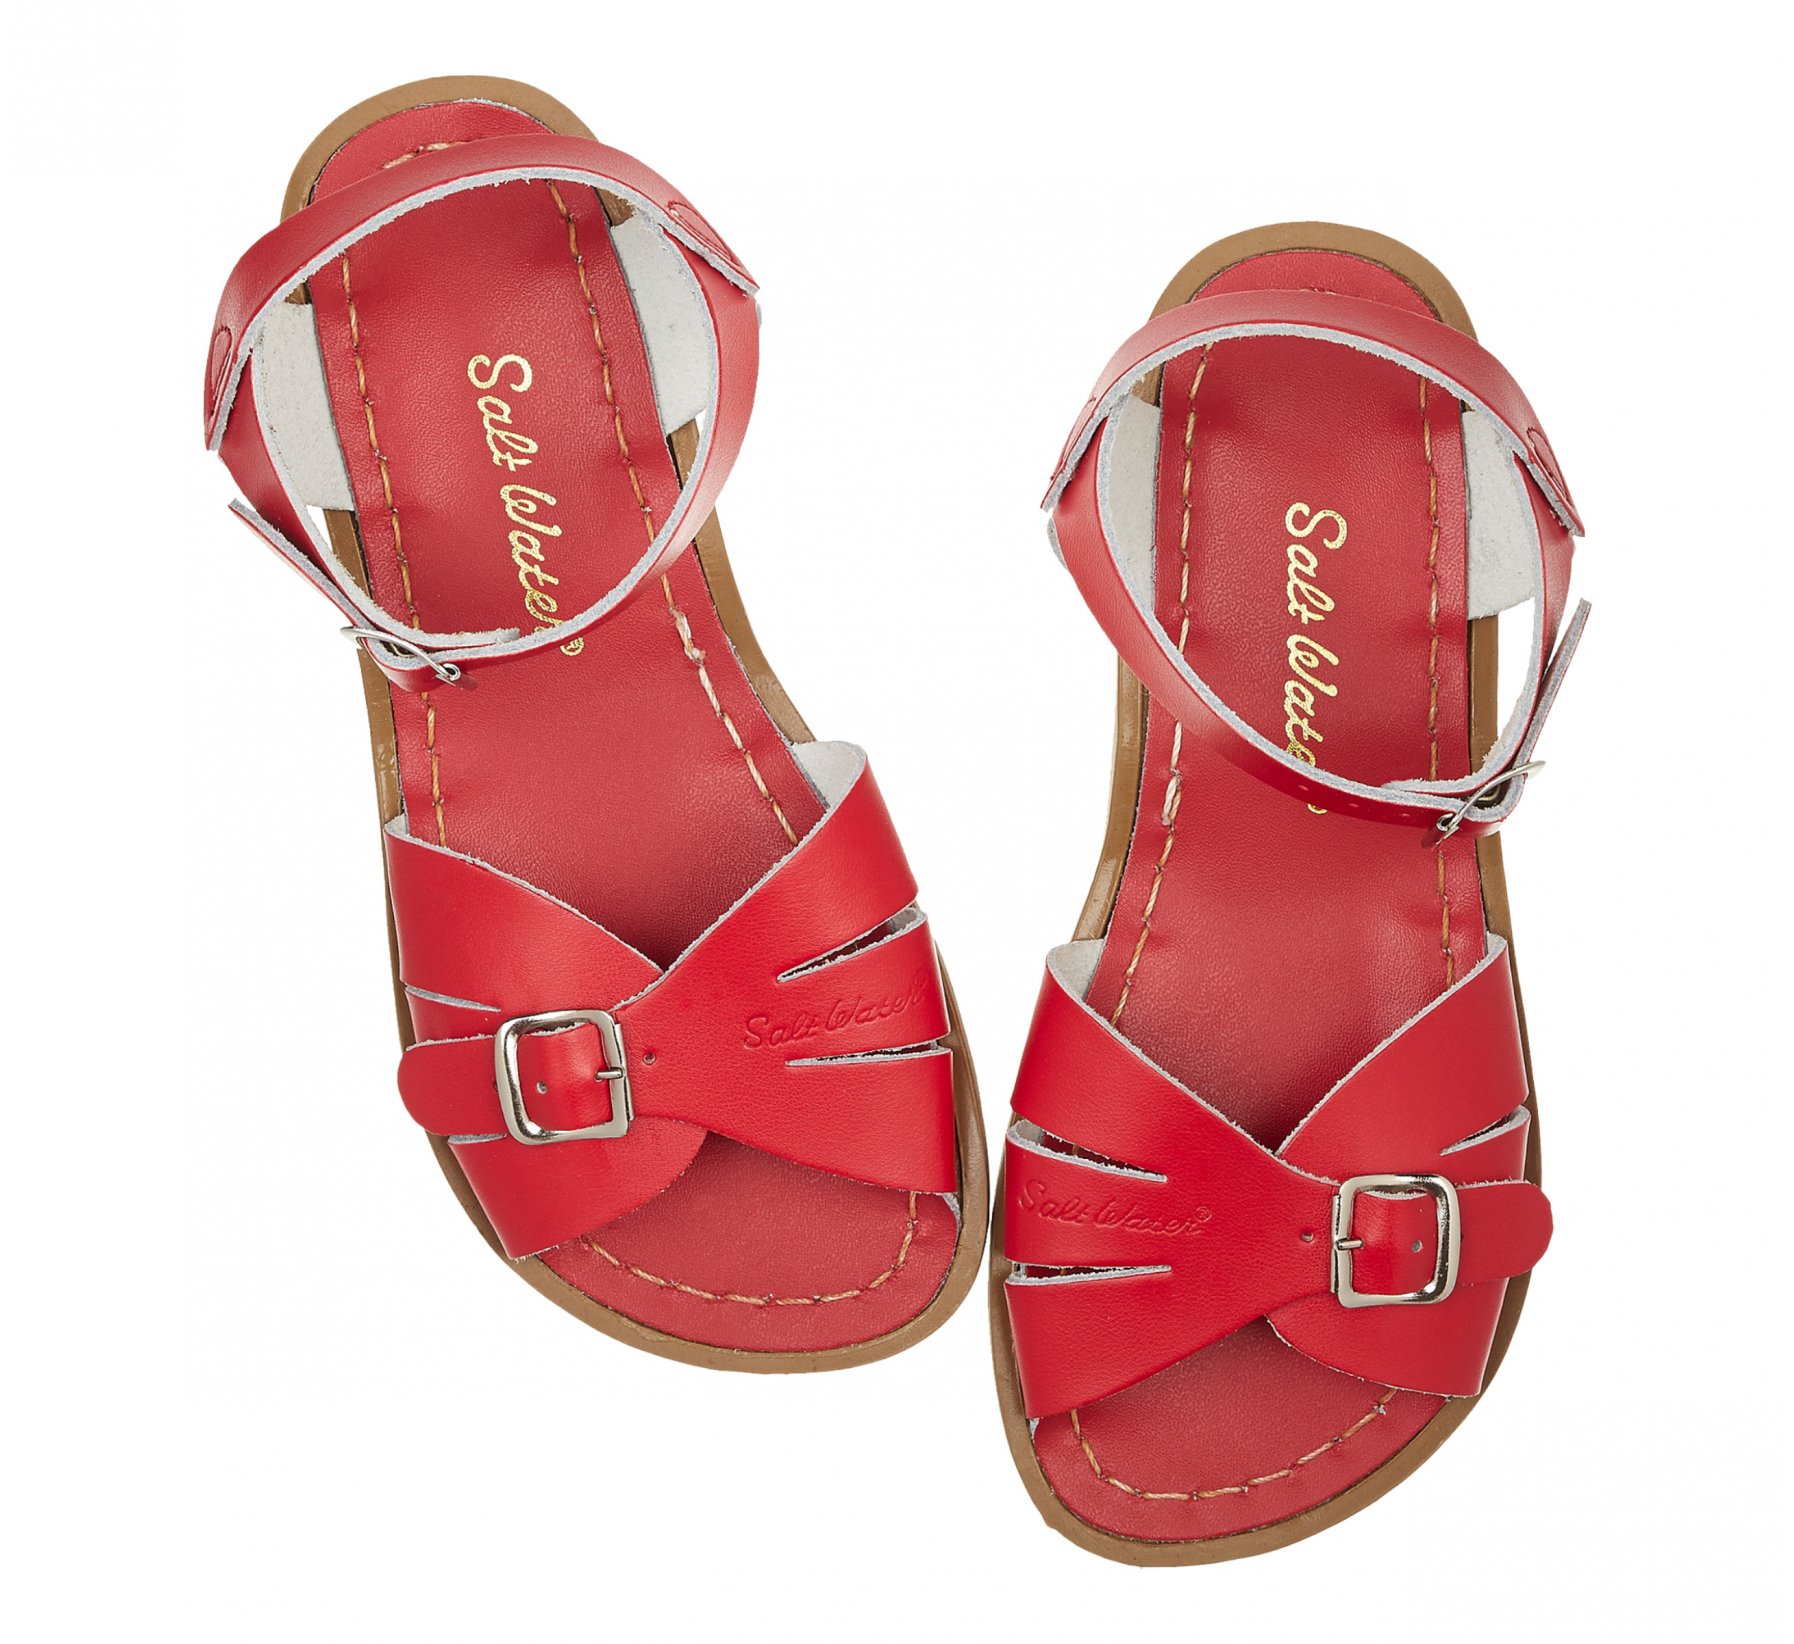 Classic Red Kids Sandals - Salt-Water Sandals Shop